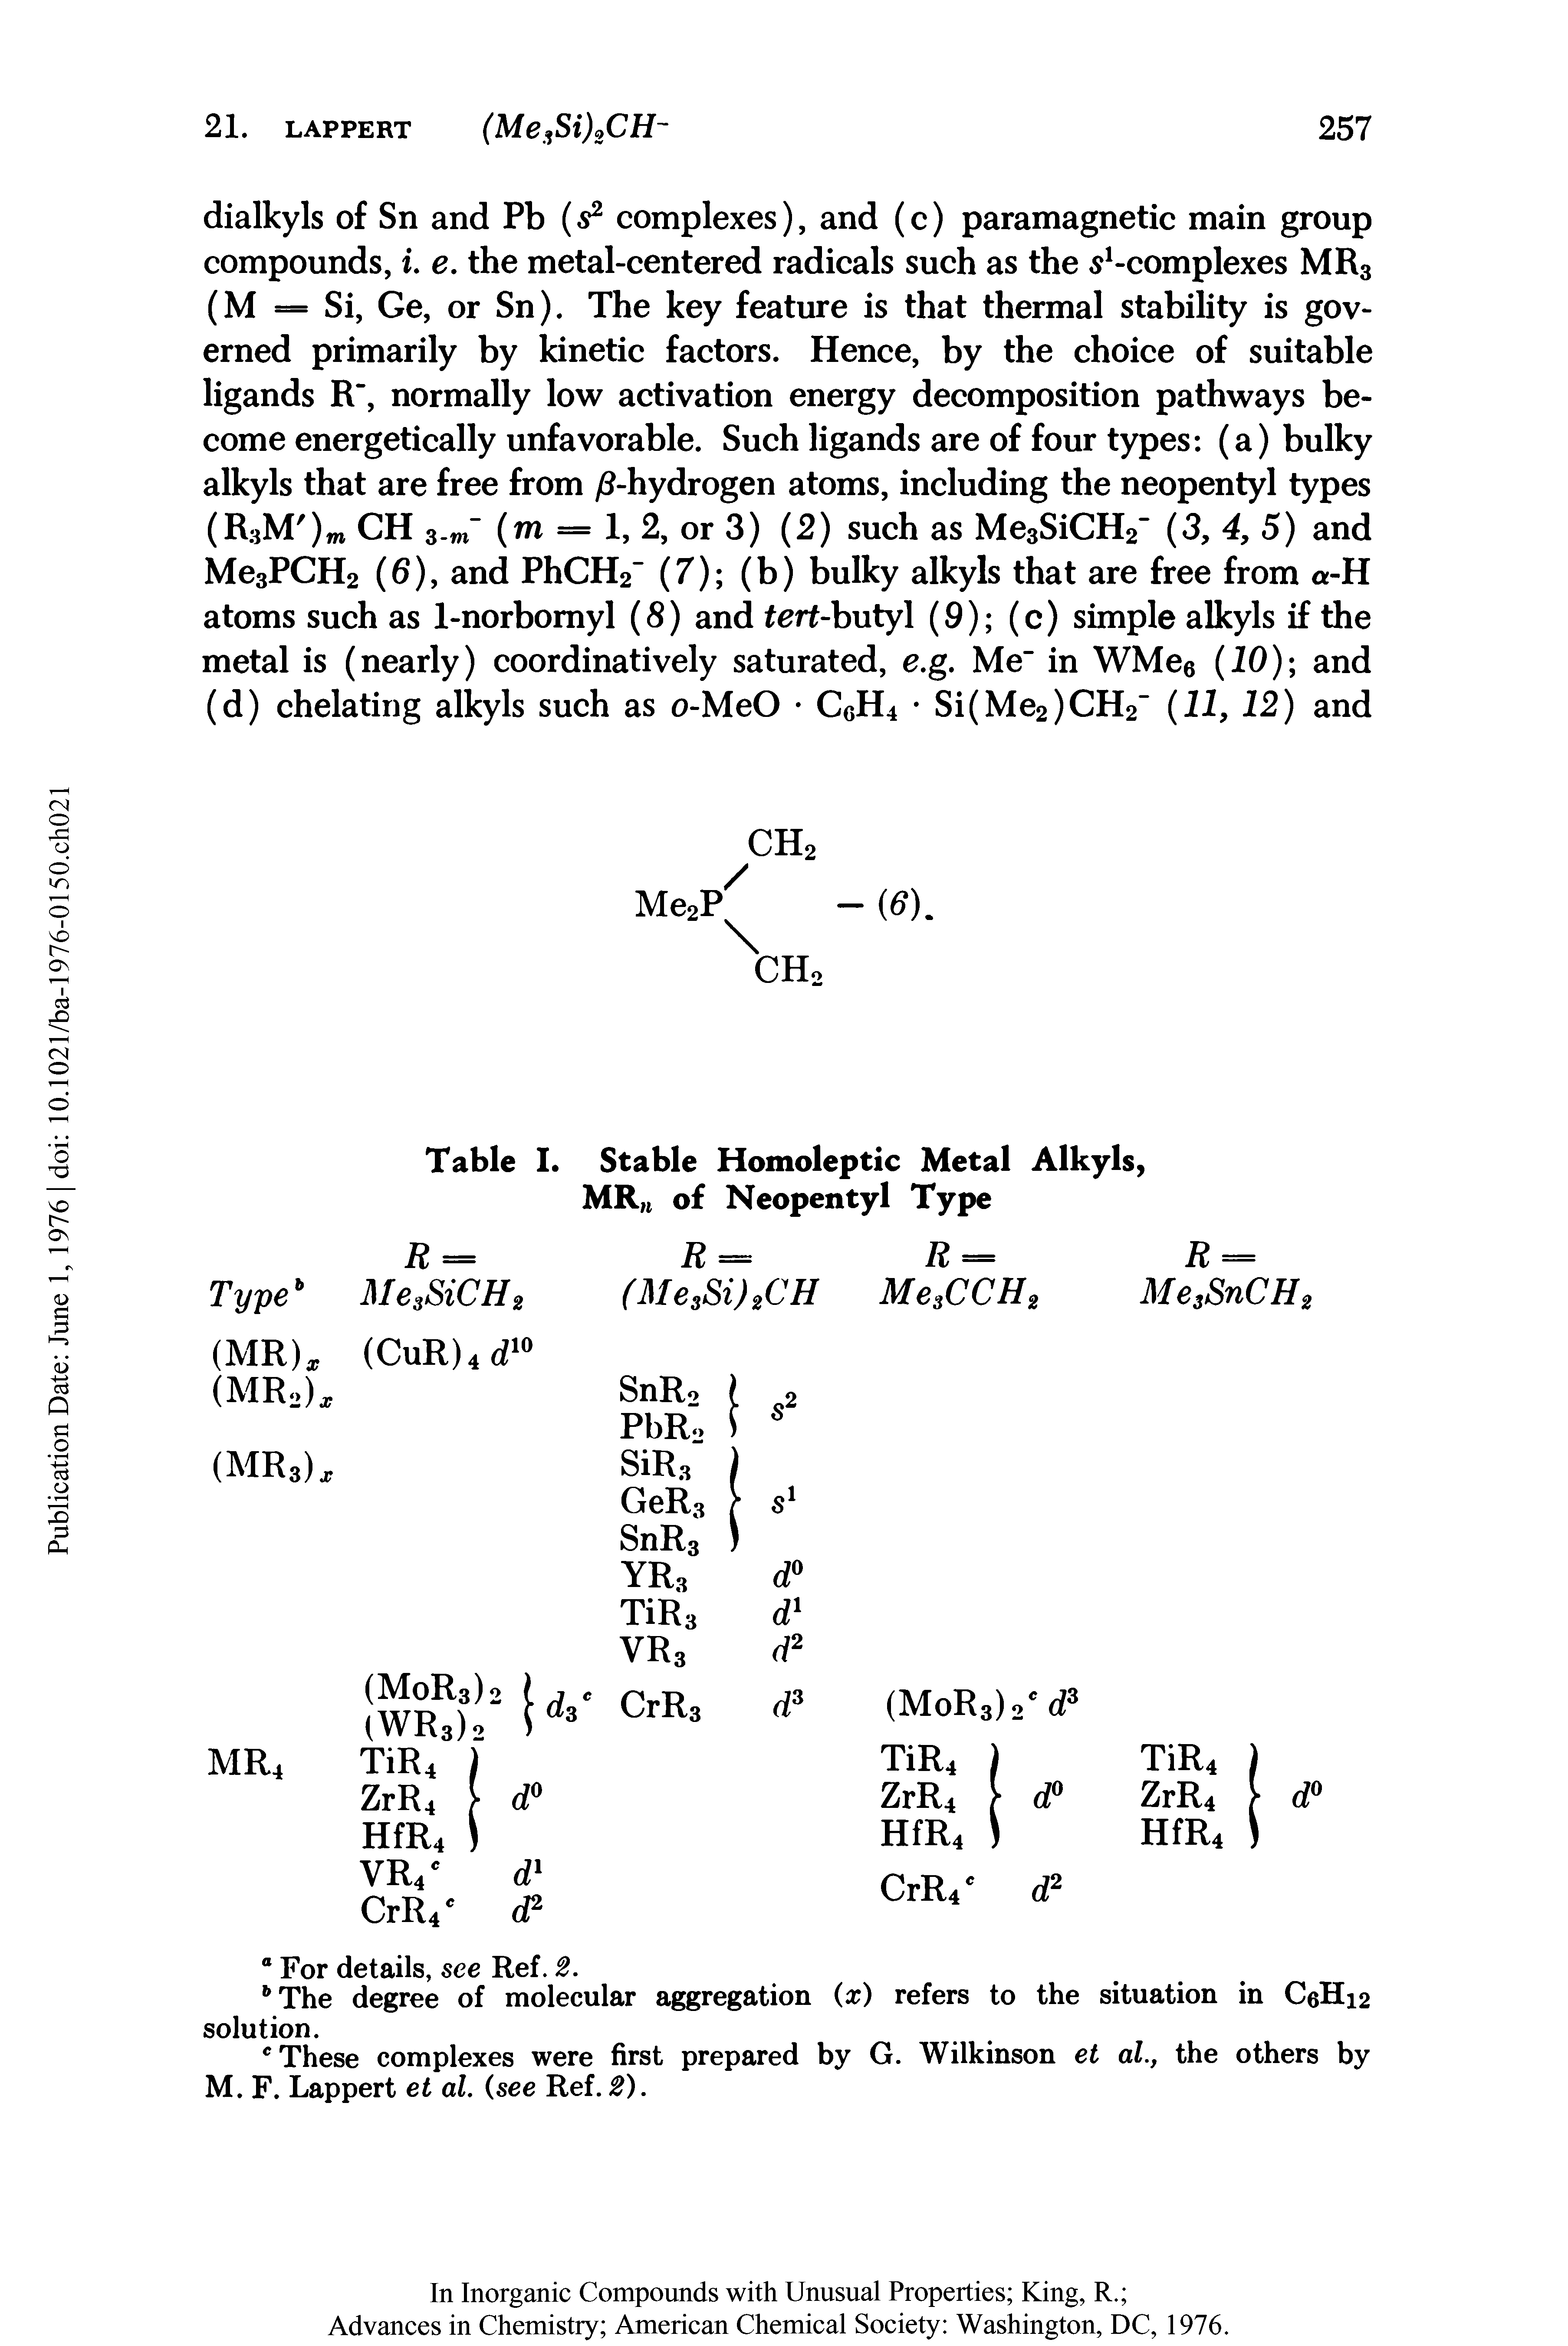 Table I. Stable Homoleptic Metal Alkyls, MRh of Neopentyl Type...